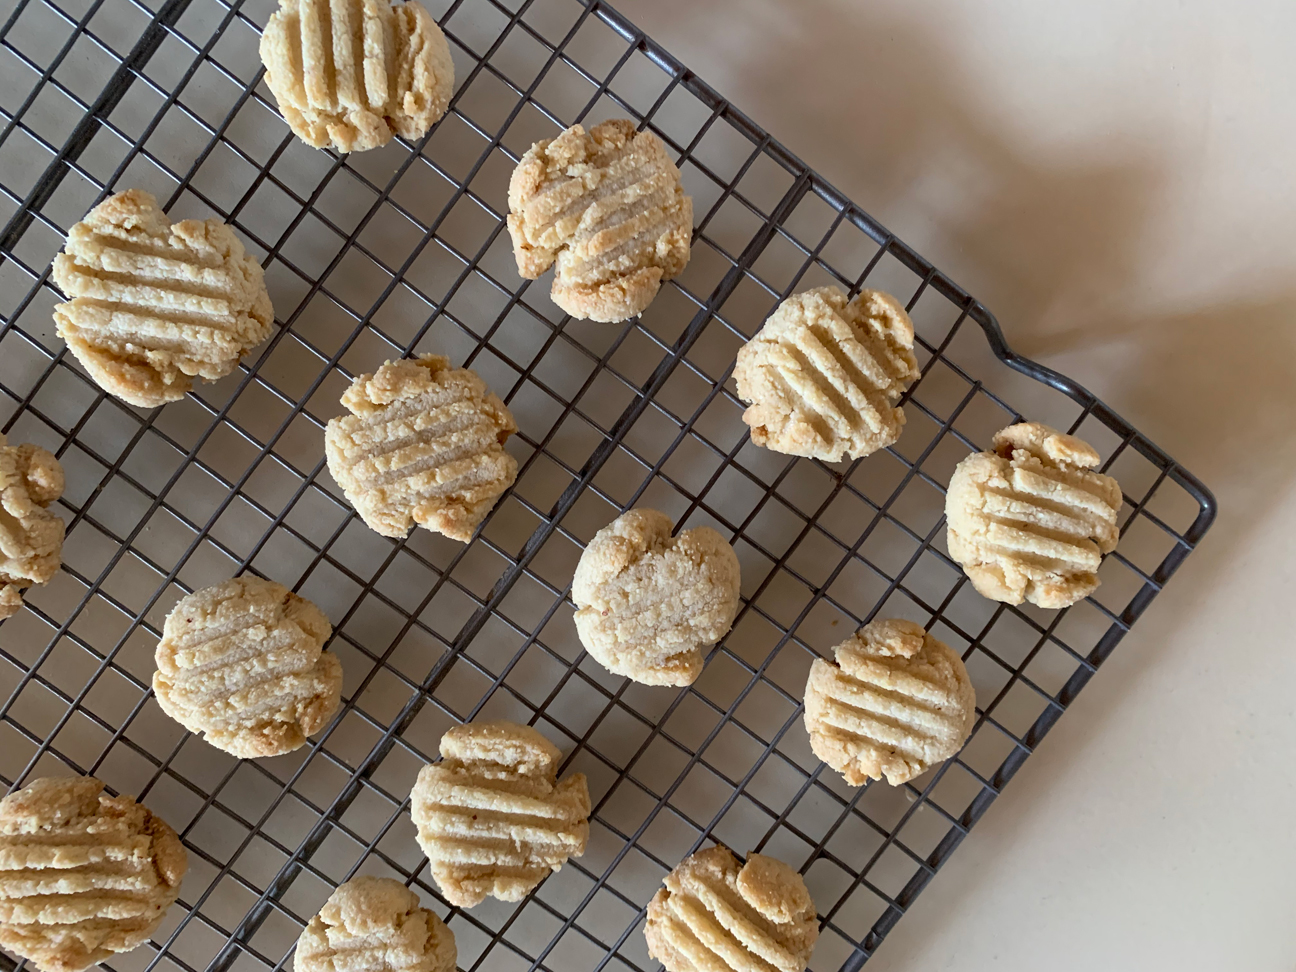 almond-shortbread-cookie-recipe-gf-vegan-with-chocolate-de-smet-dossier